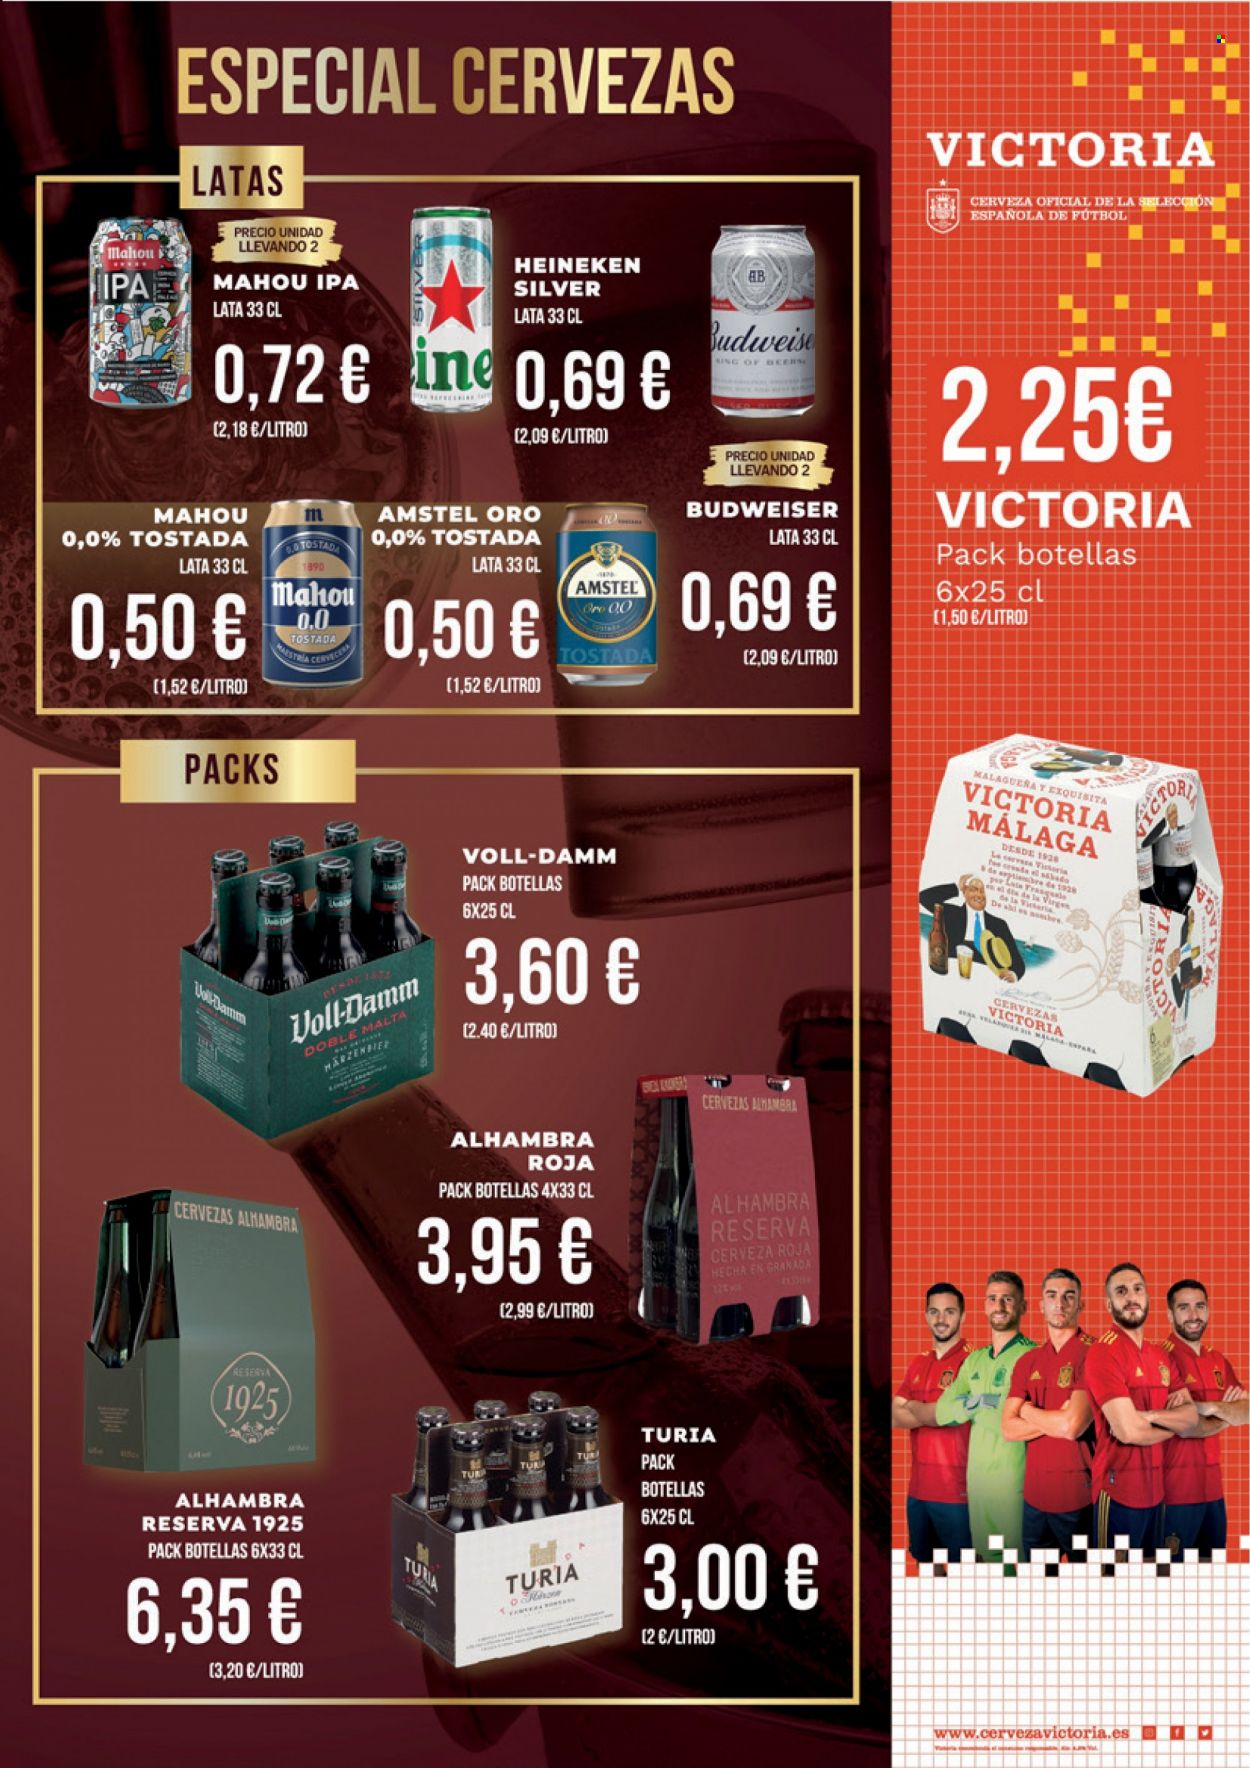 thumbnail - Folleto actual Supermercados Plaza - 16/05/22 - 31/05/22 - Ventas - Alhambra, Budweiser, Heineken, Mahou, Voll-Damm, cerveza, Amstel. Página 11.